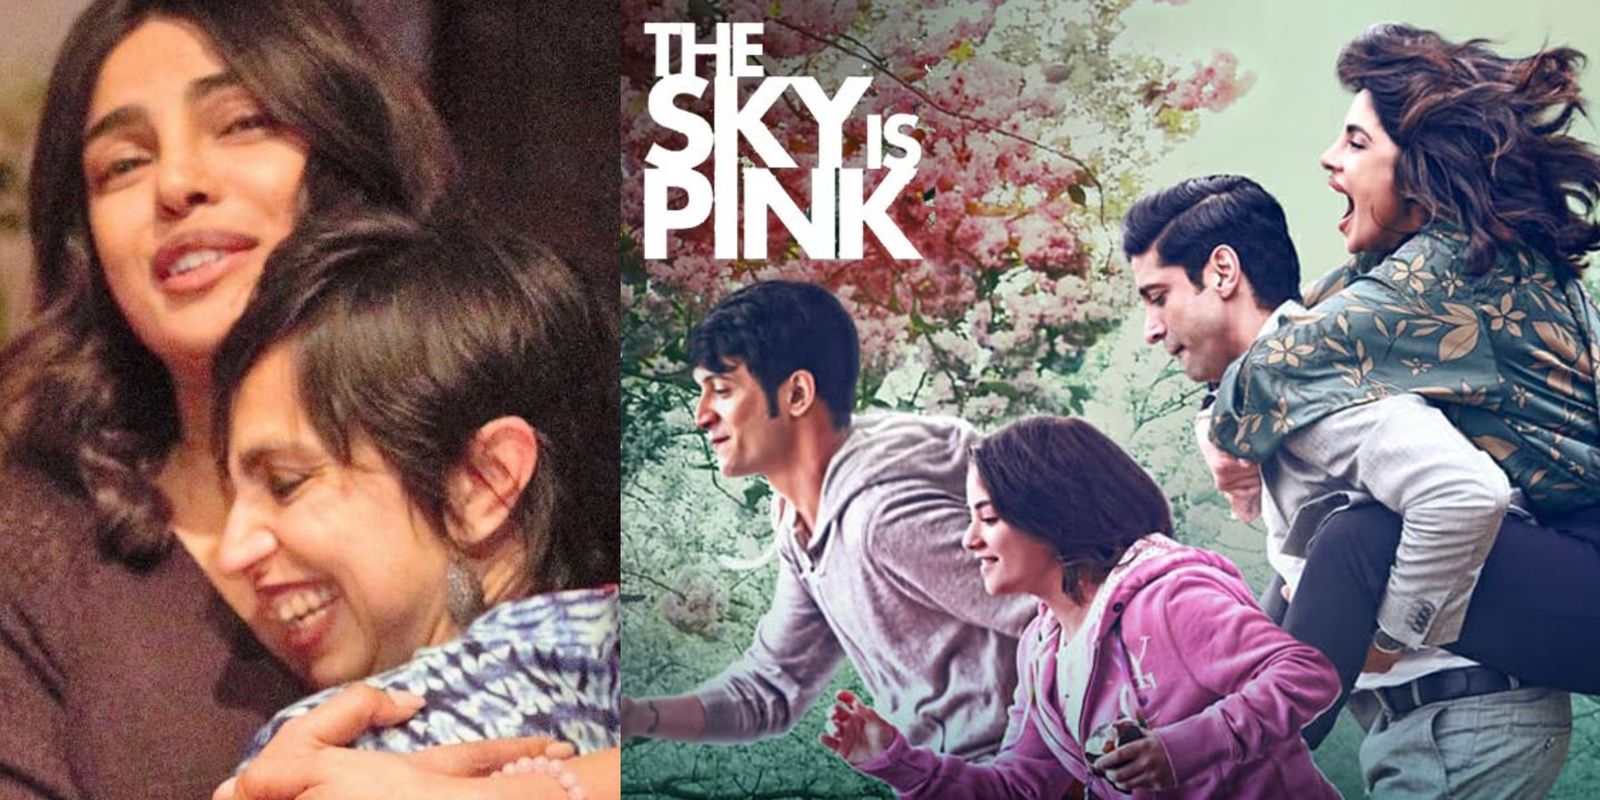 Priyanka Chopra Broke Down While Shooting For A Scene In The Sky Is Pink, Reveals Director Shonali Bose